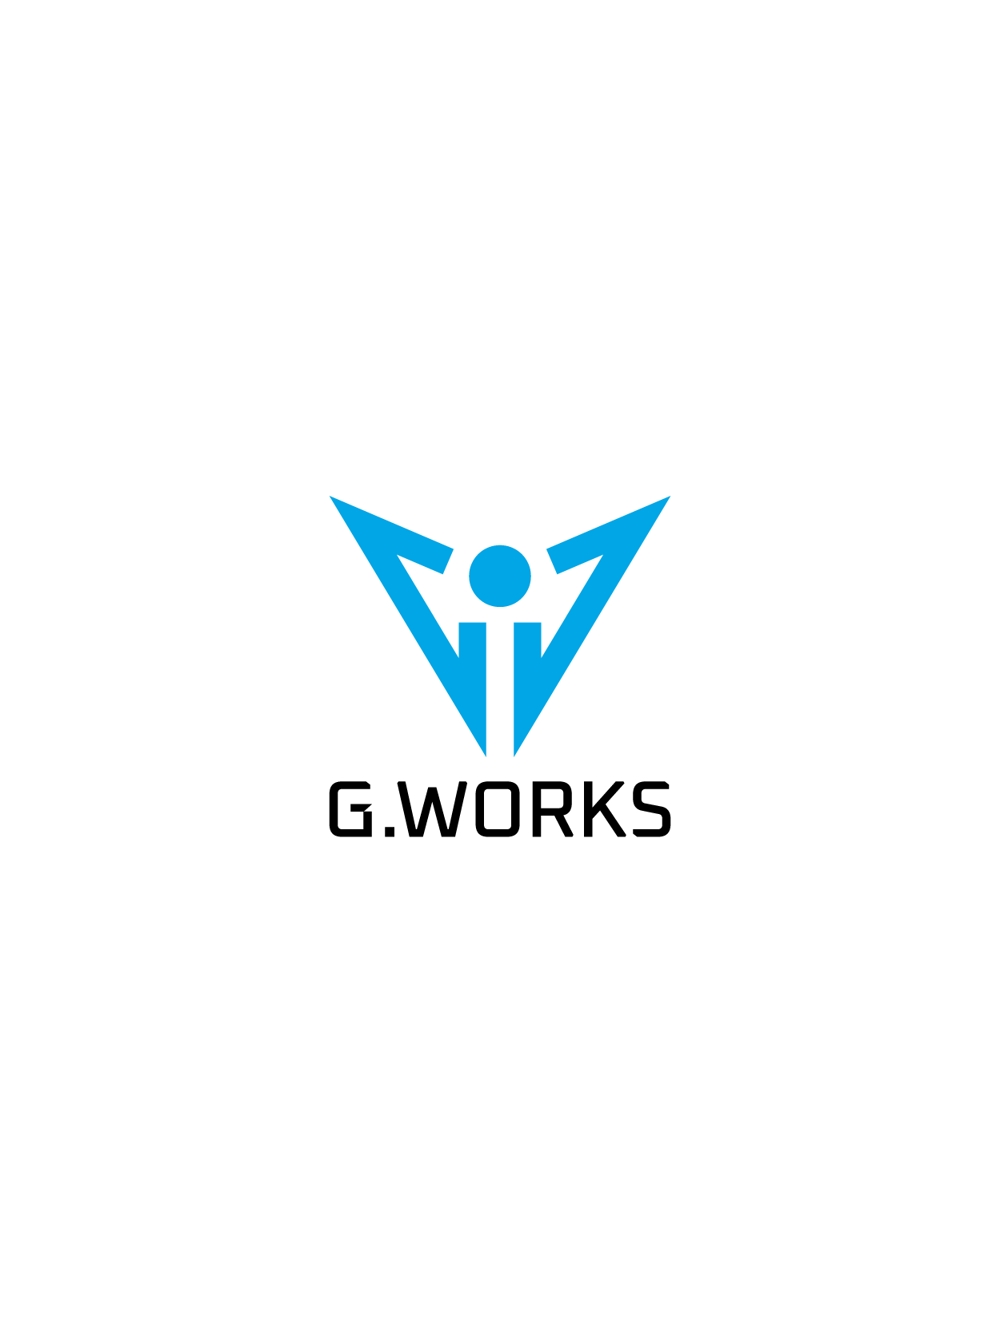 G.WORKS